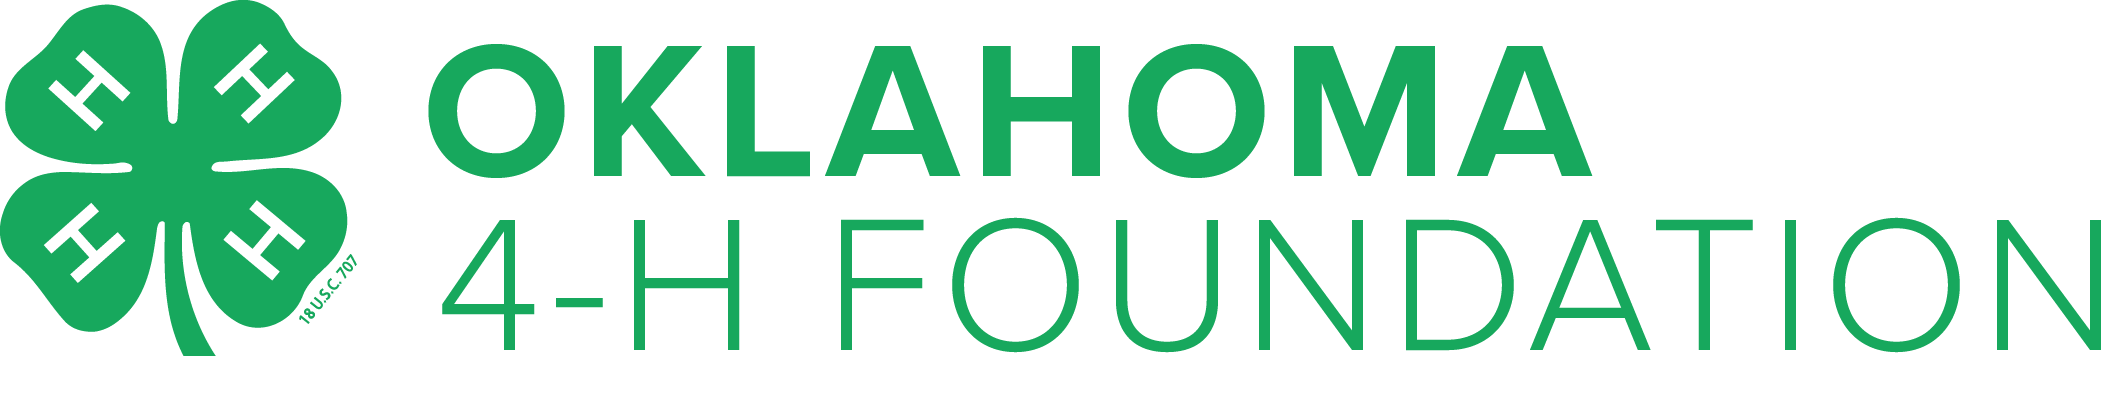 Oklahoma 4-H Foundation